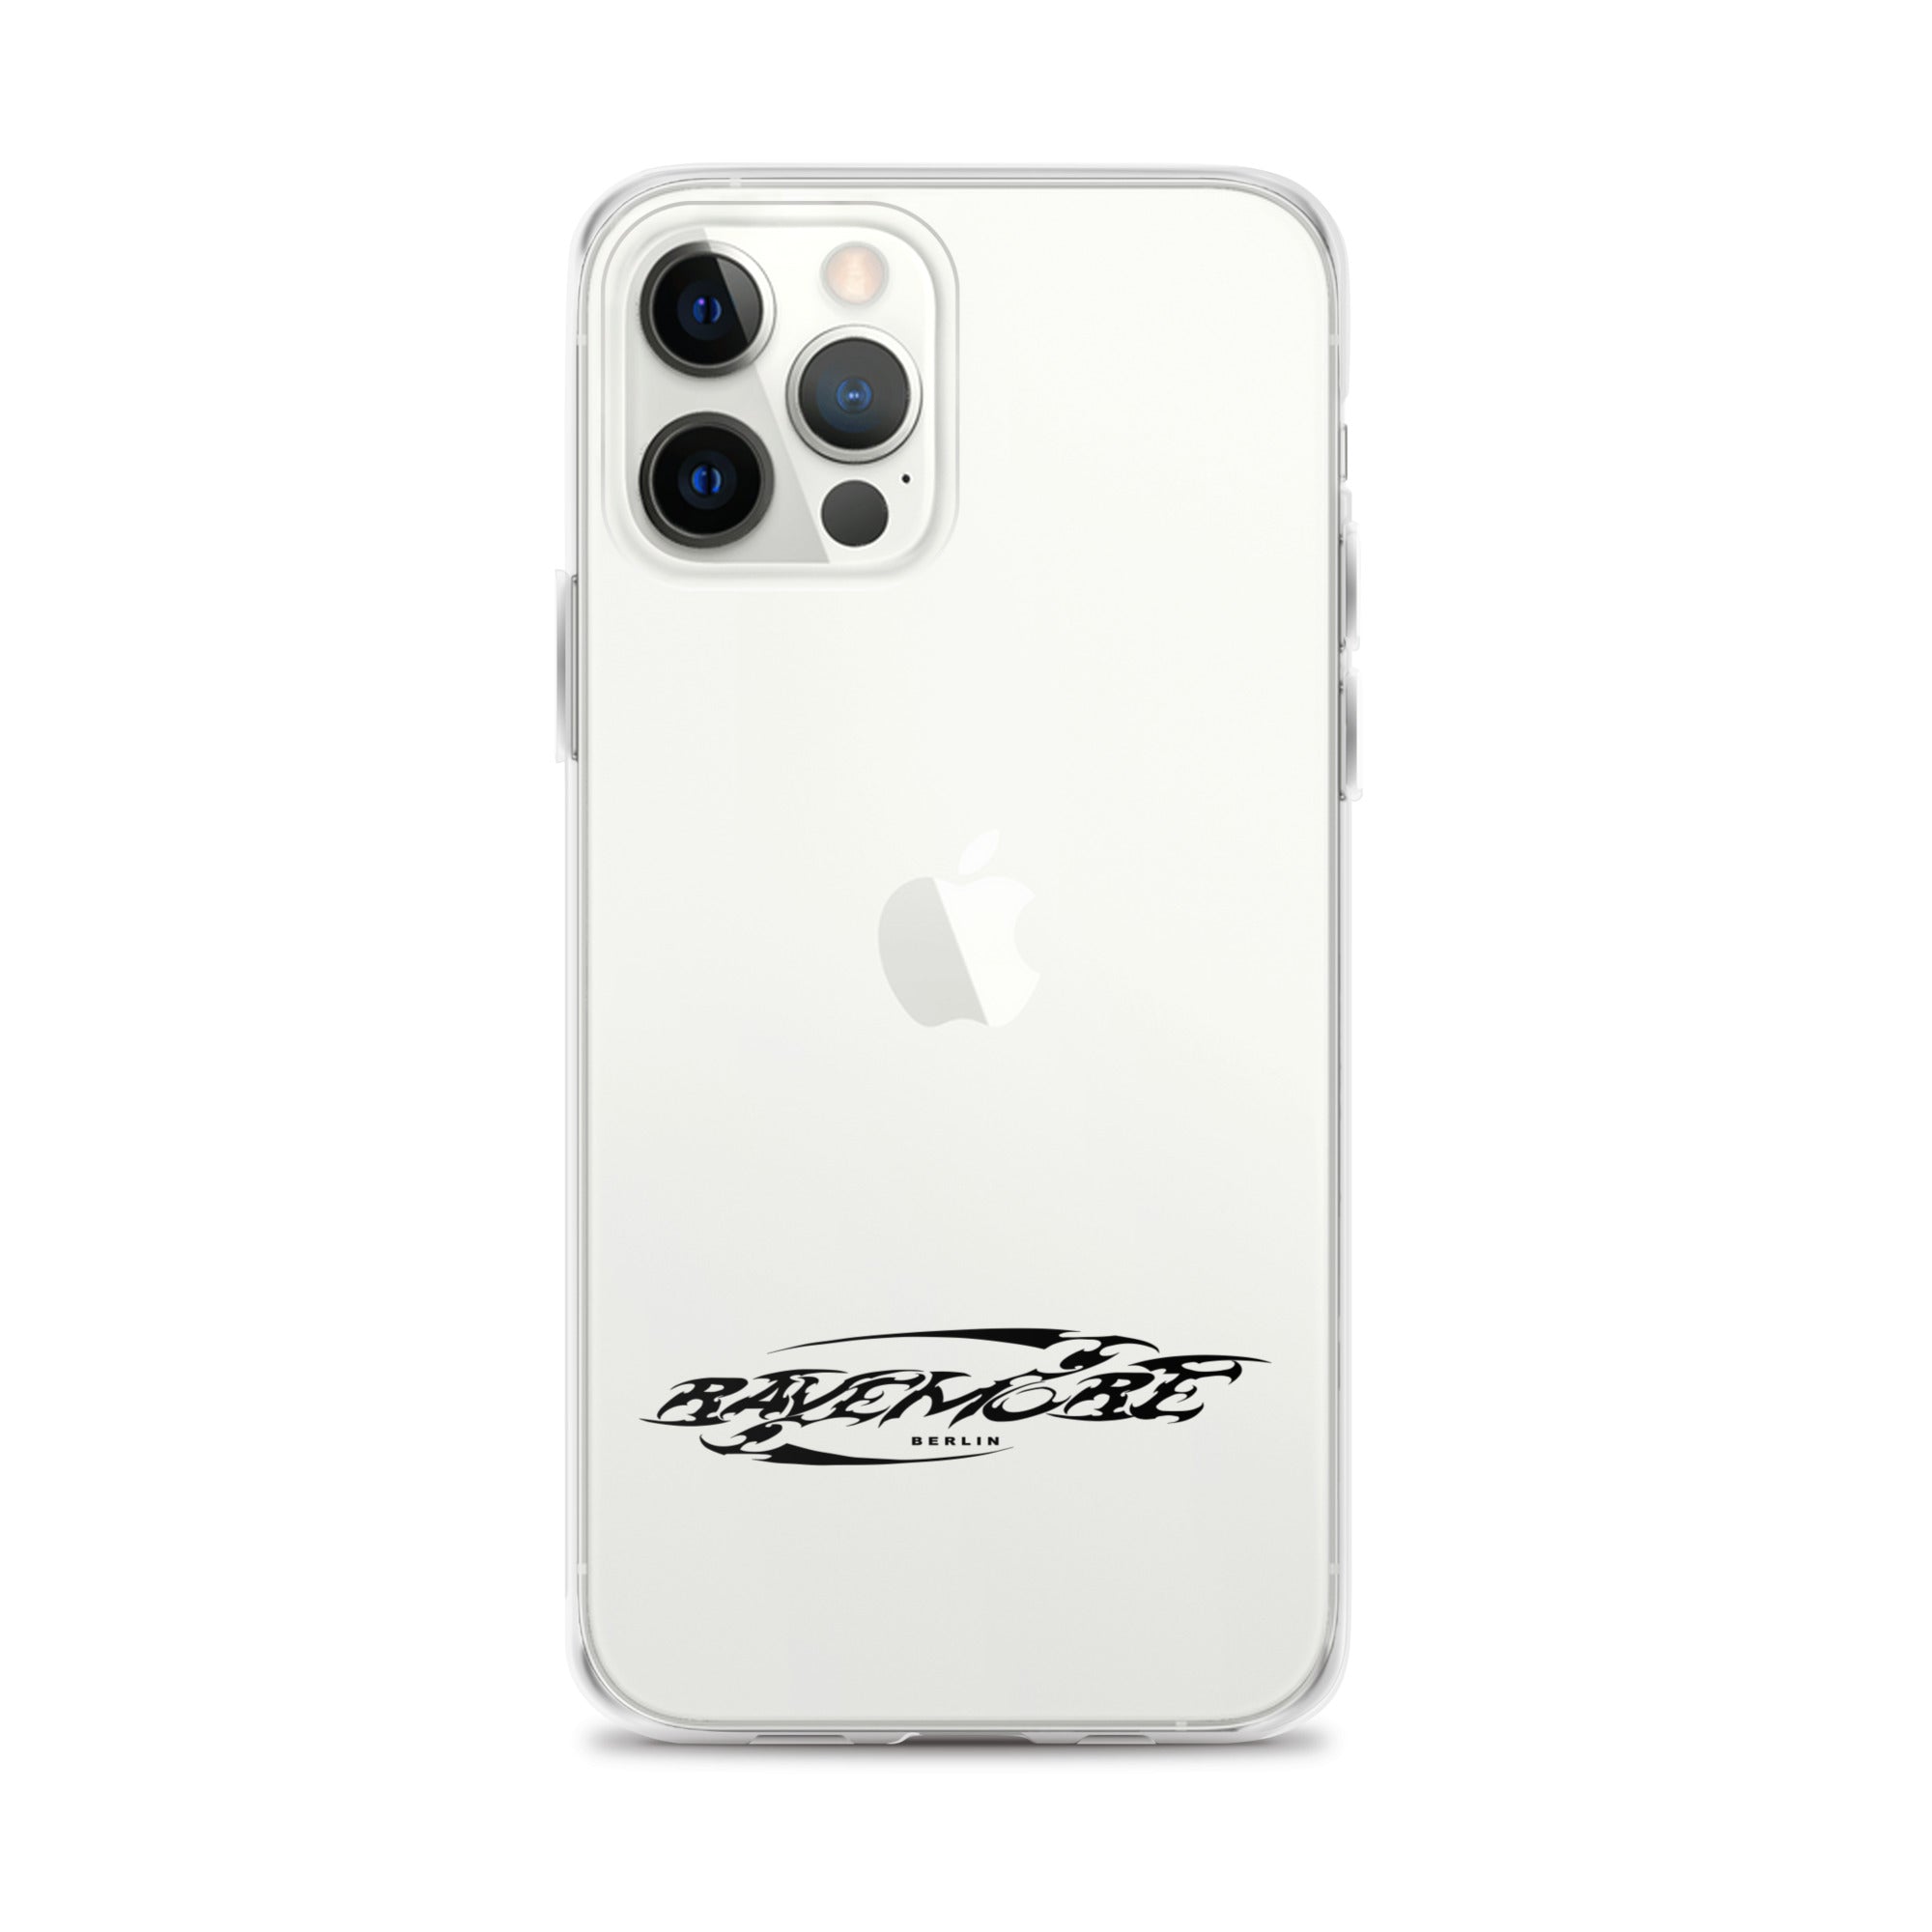 Clear smartphone case